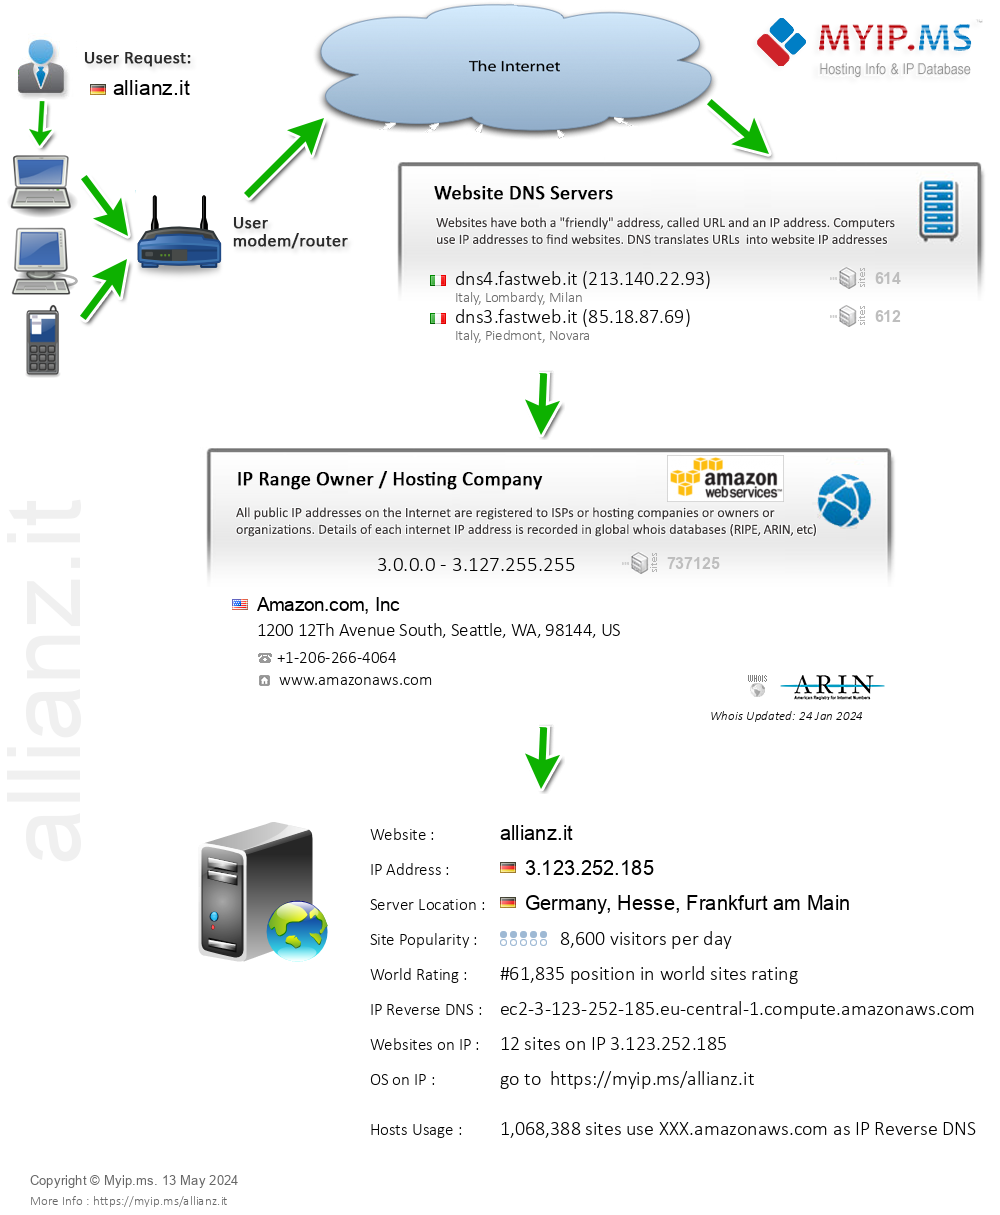 Allianz.it - Website Hosting Visual IP Diagram